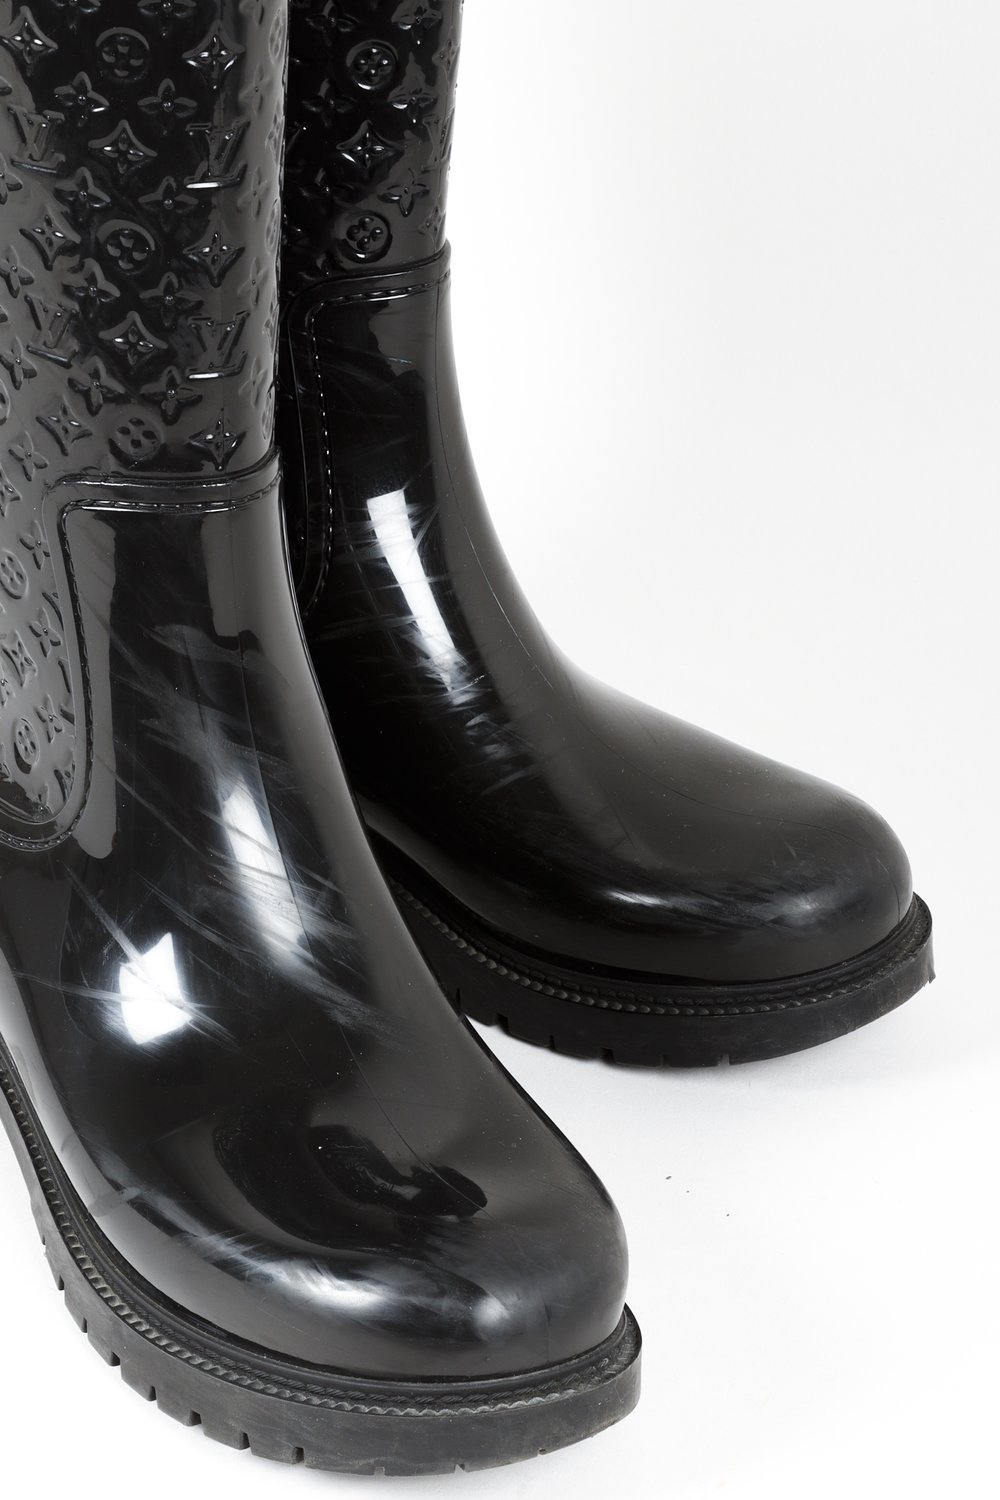 LOUIS VUITTON Rubber Embossed Monogram Splash Rain Boots 39 Black 1247529